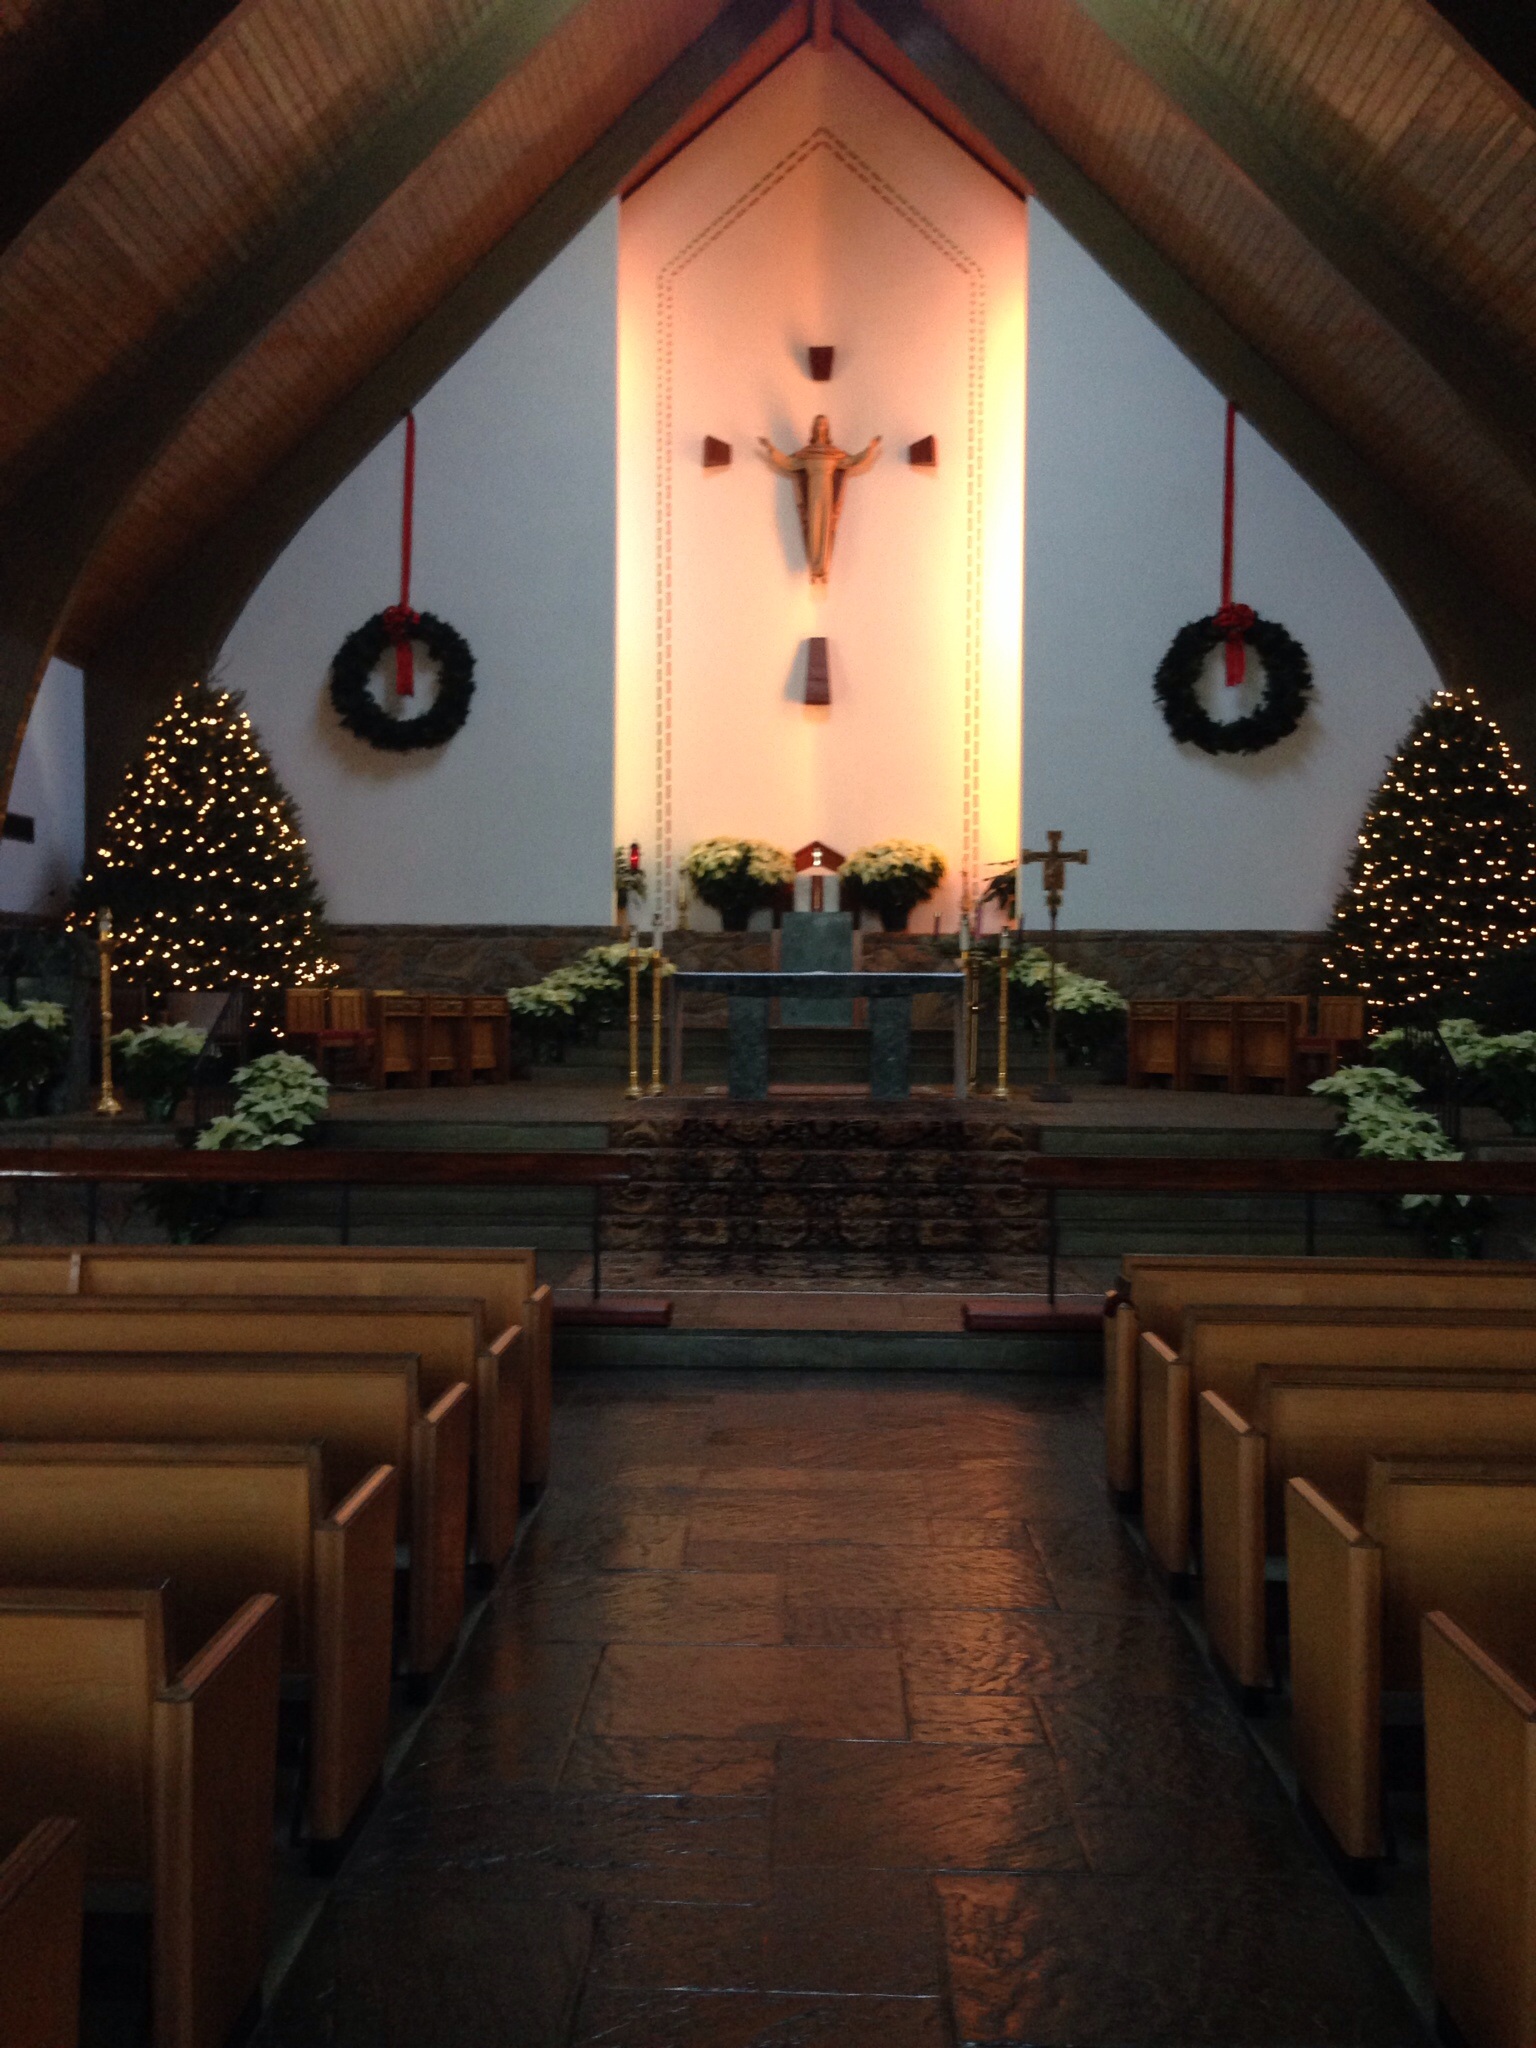 Church Christmas Decorations